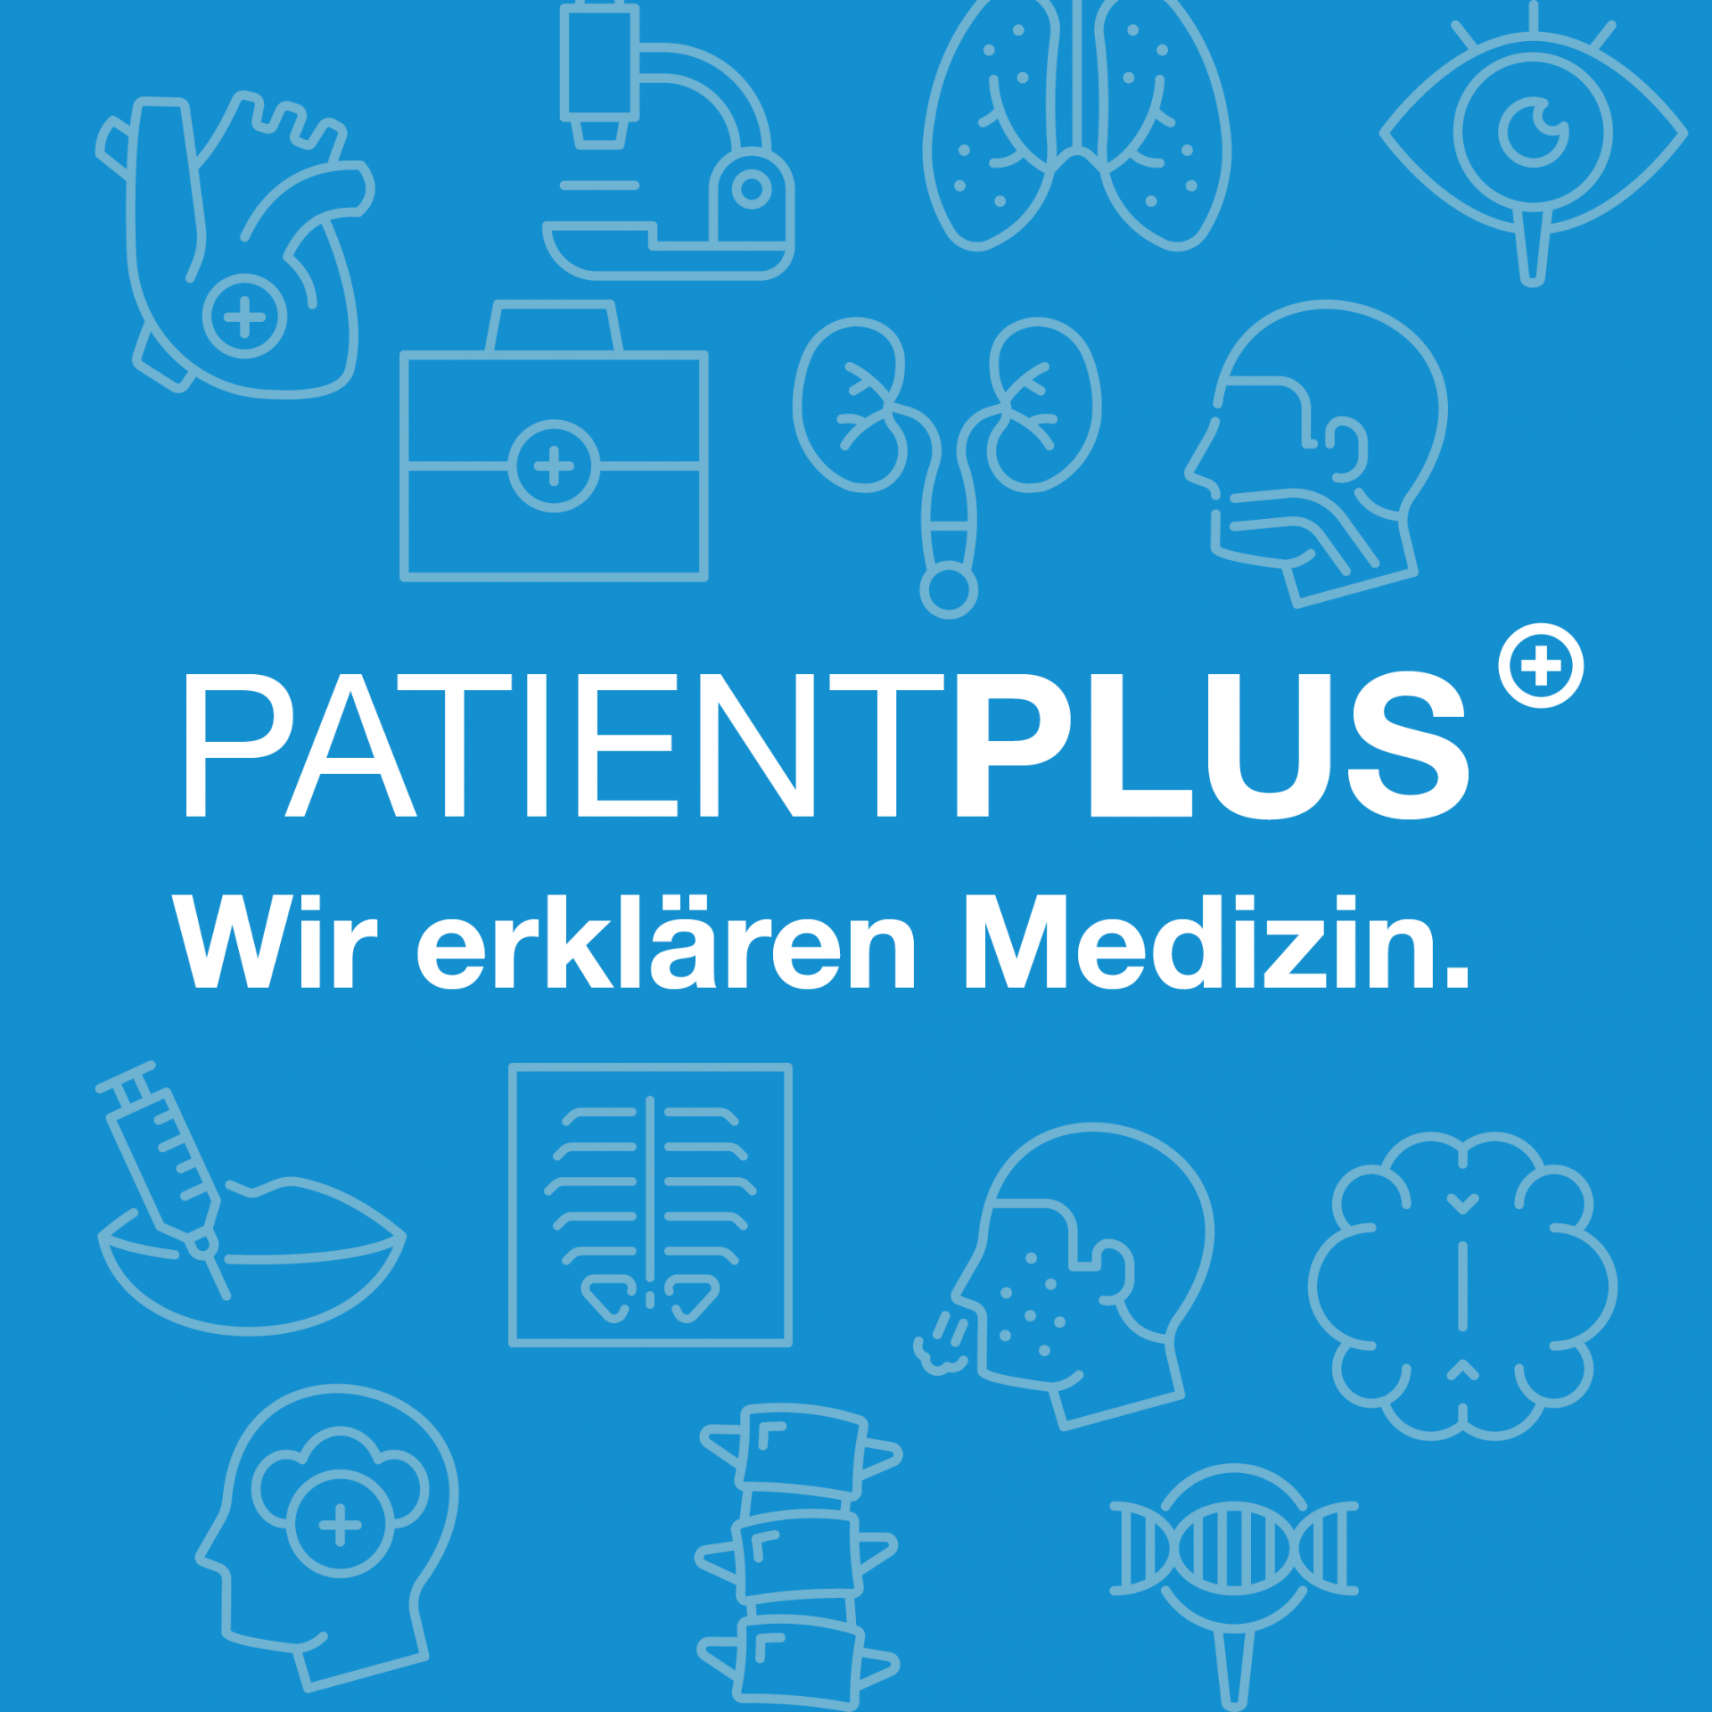 Patient Plus - Vortragsveranstaltung